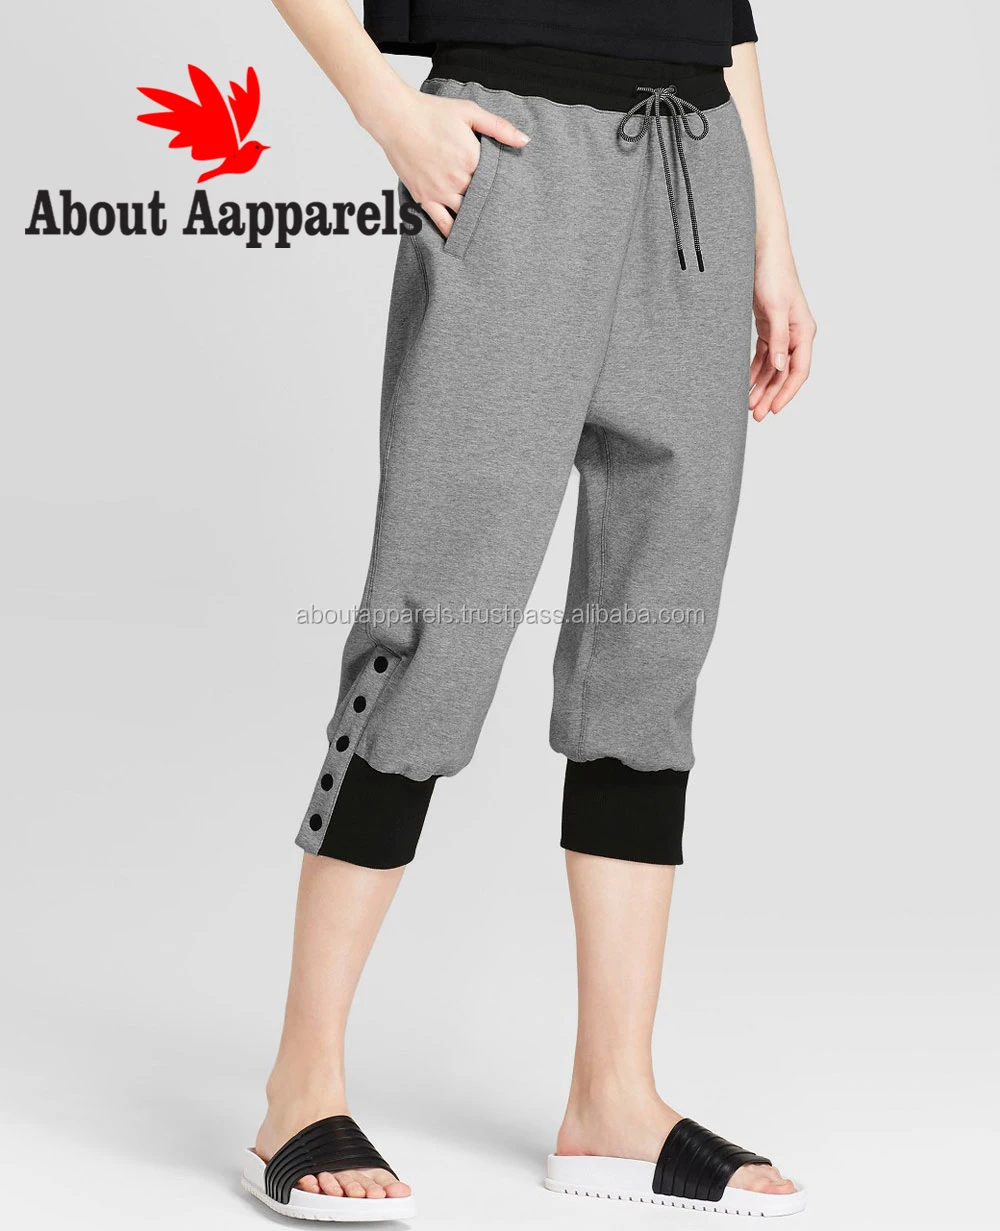 sweatpants for short legs women's